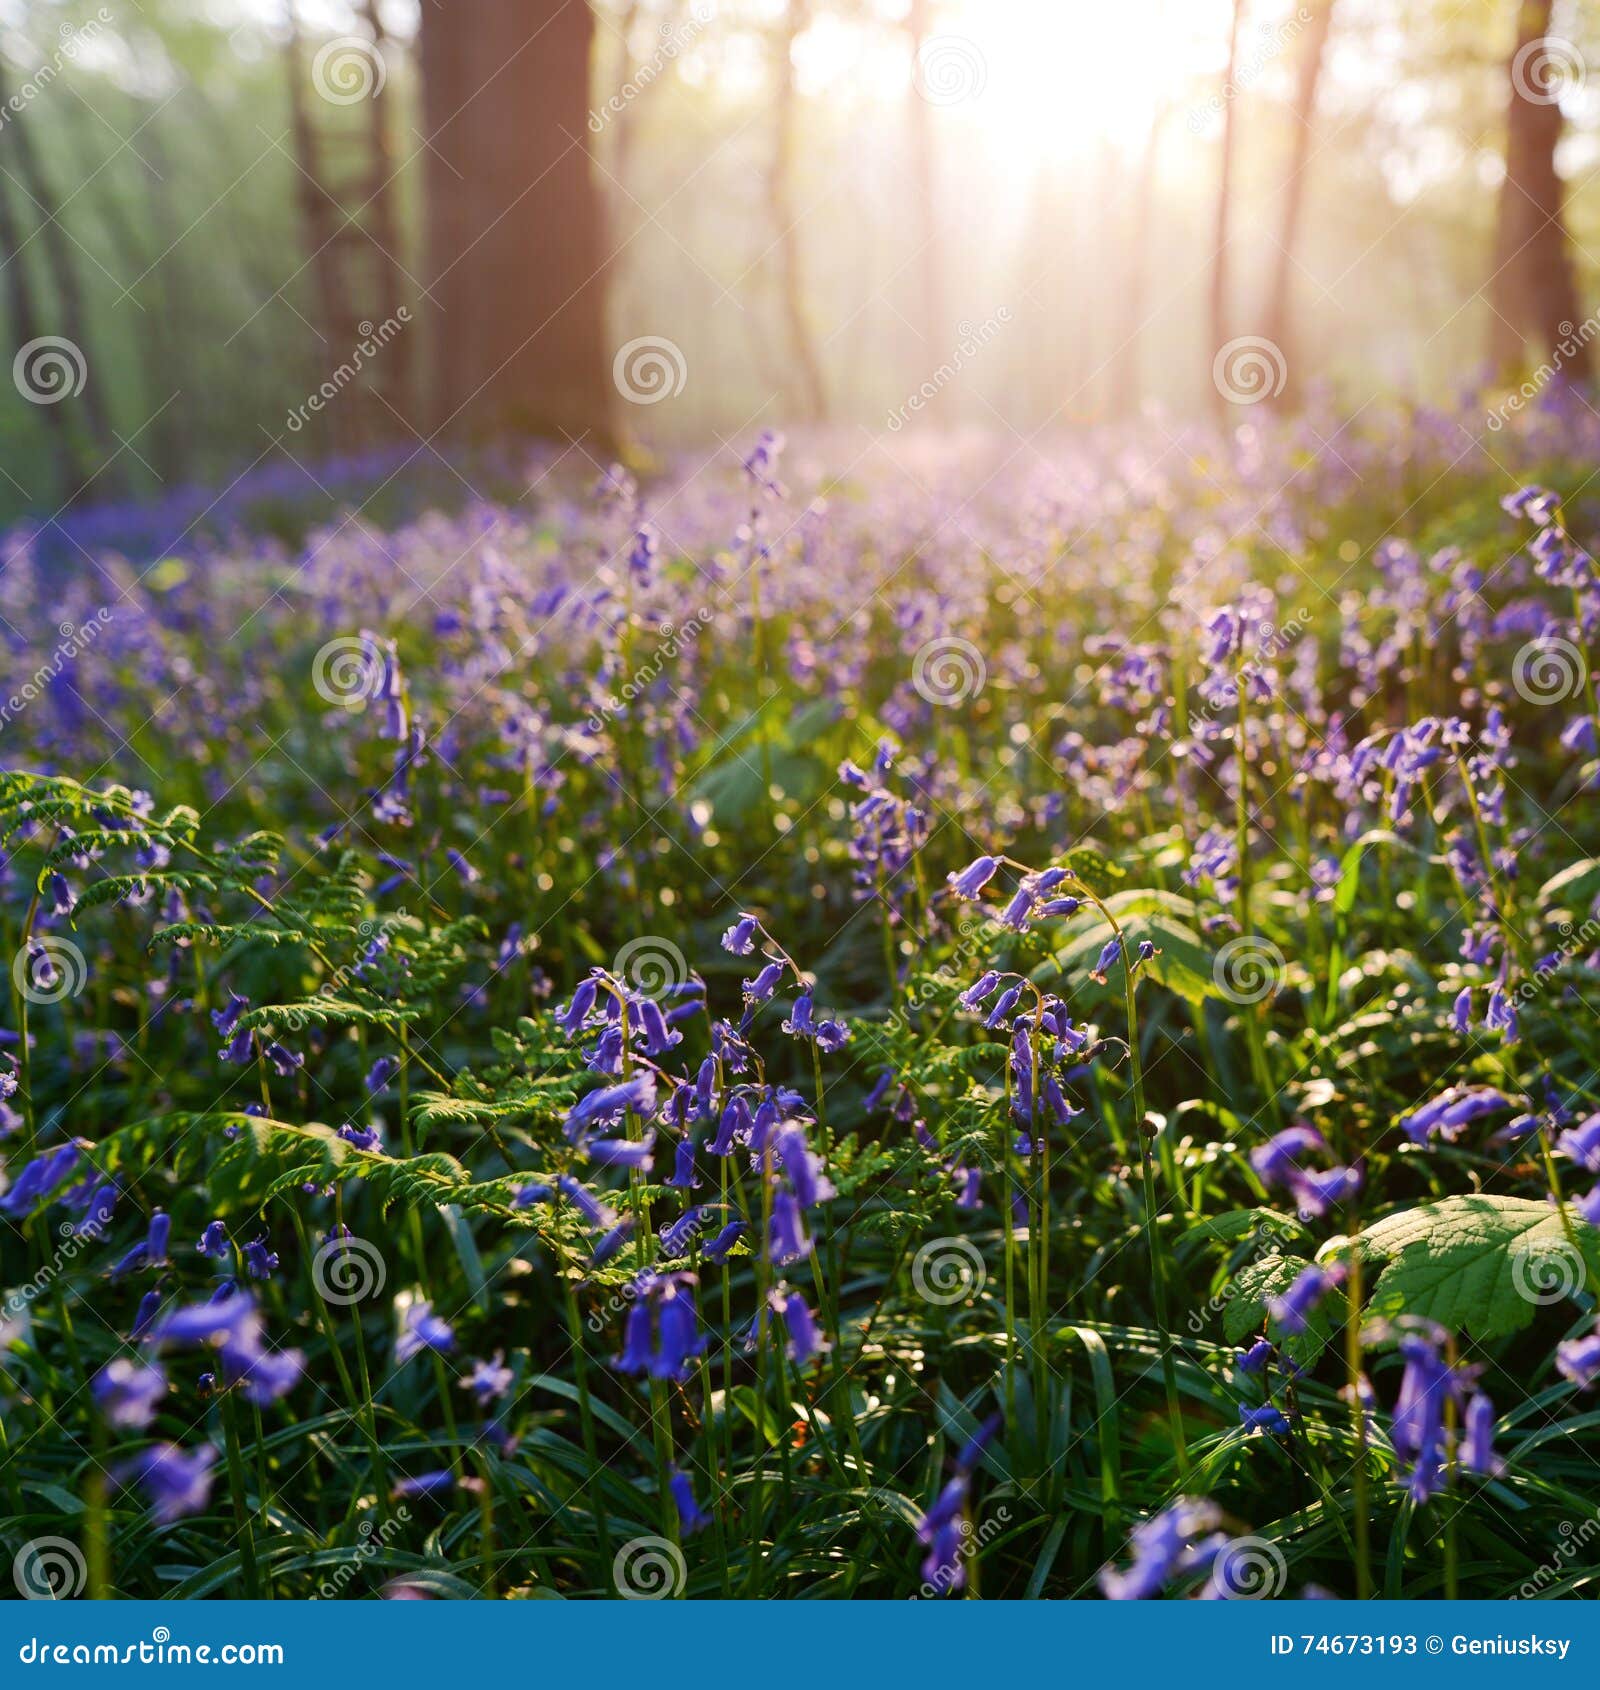 beutiful sunrise in bluebells forest in springtime